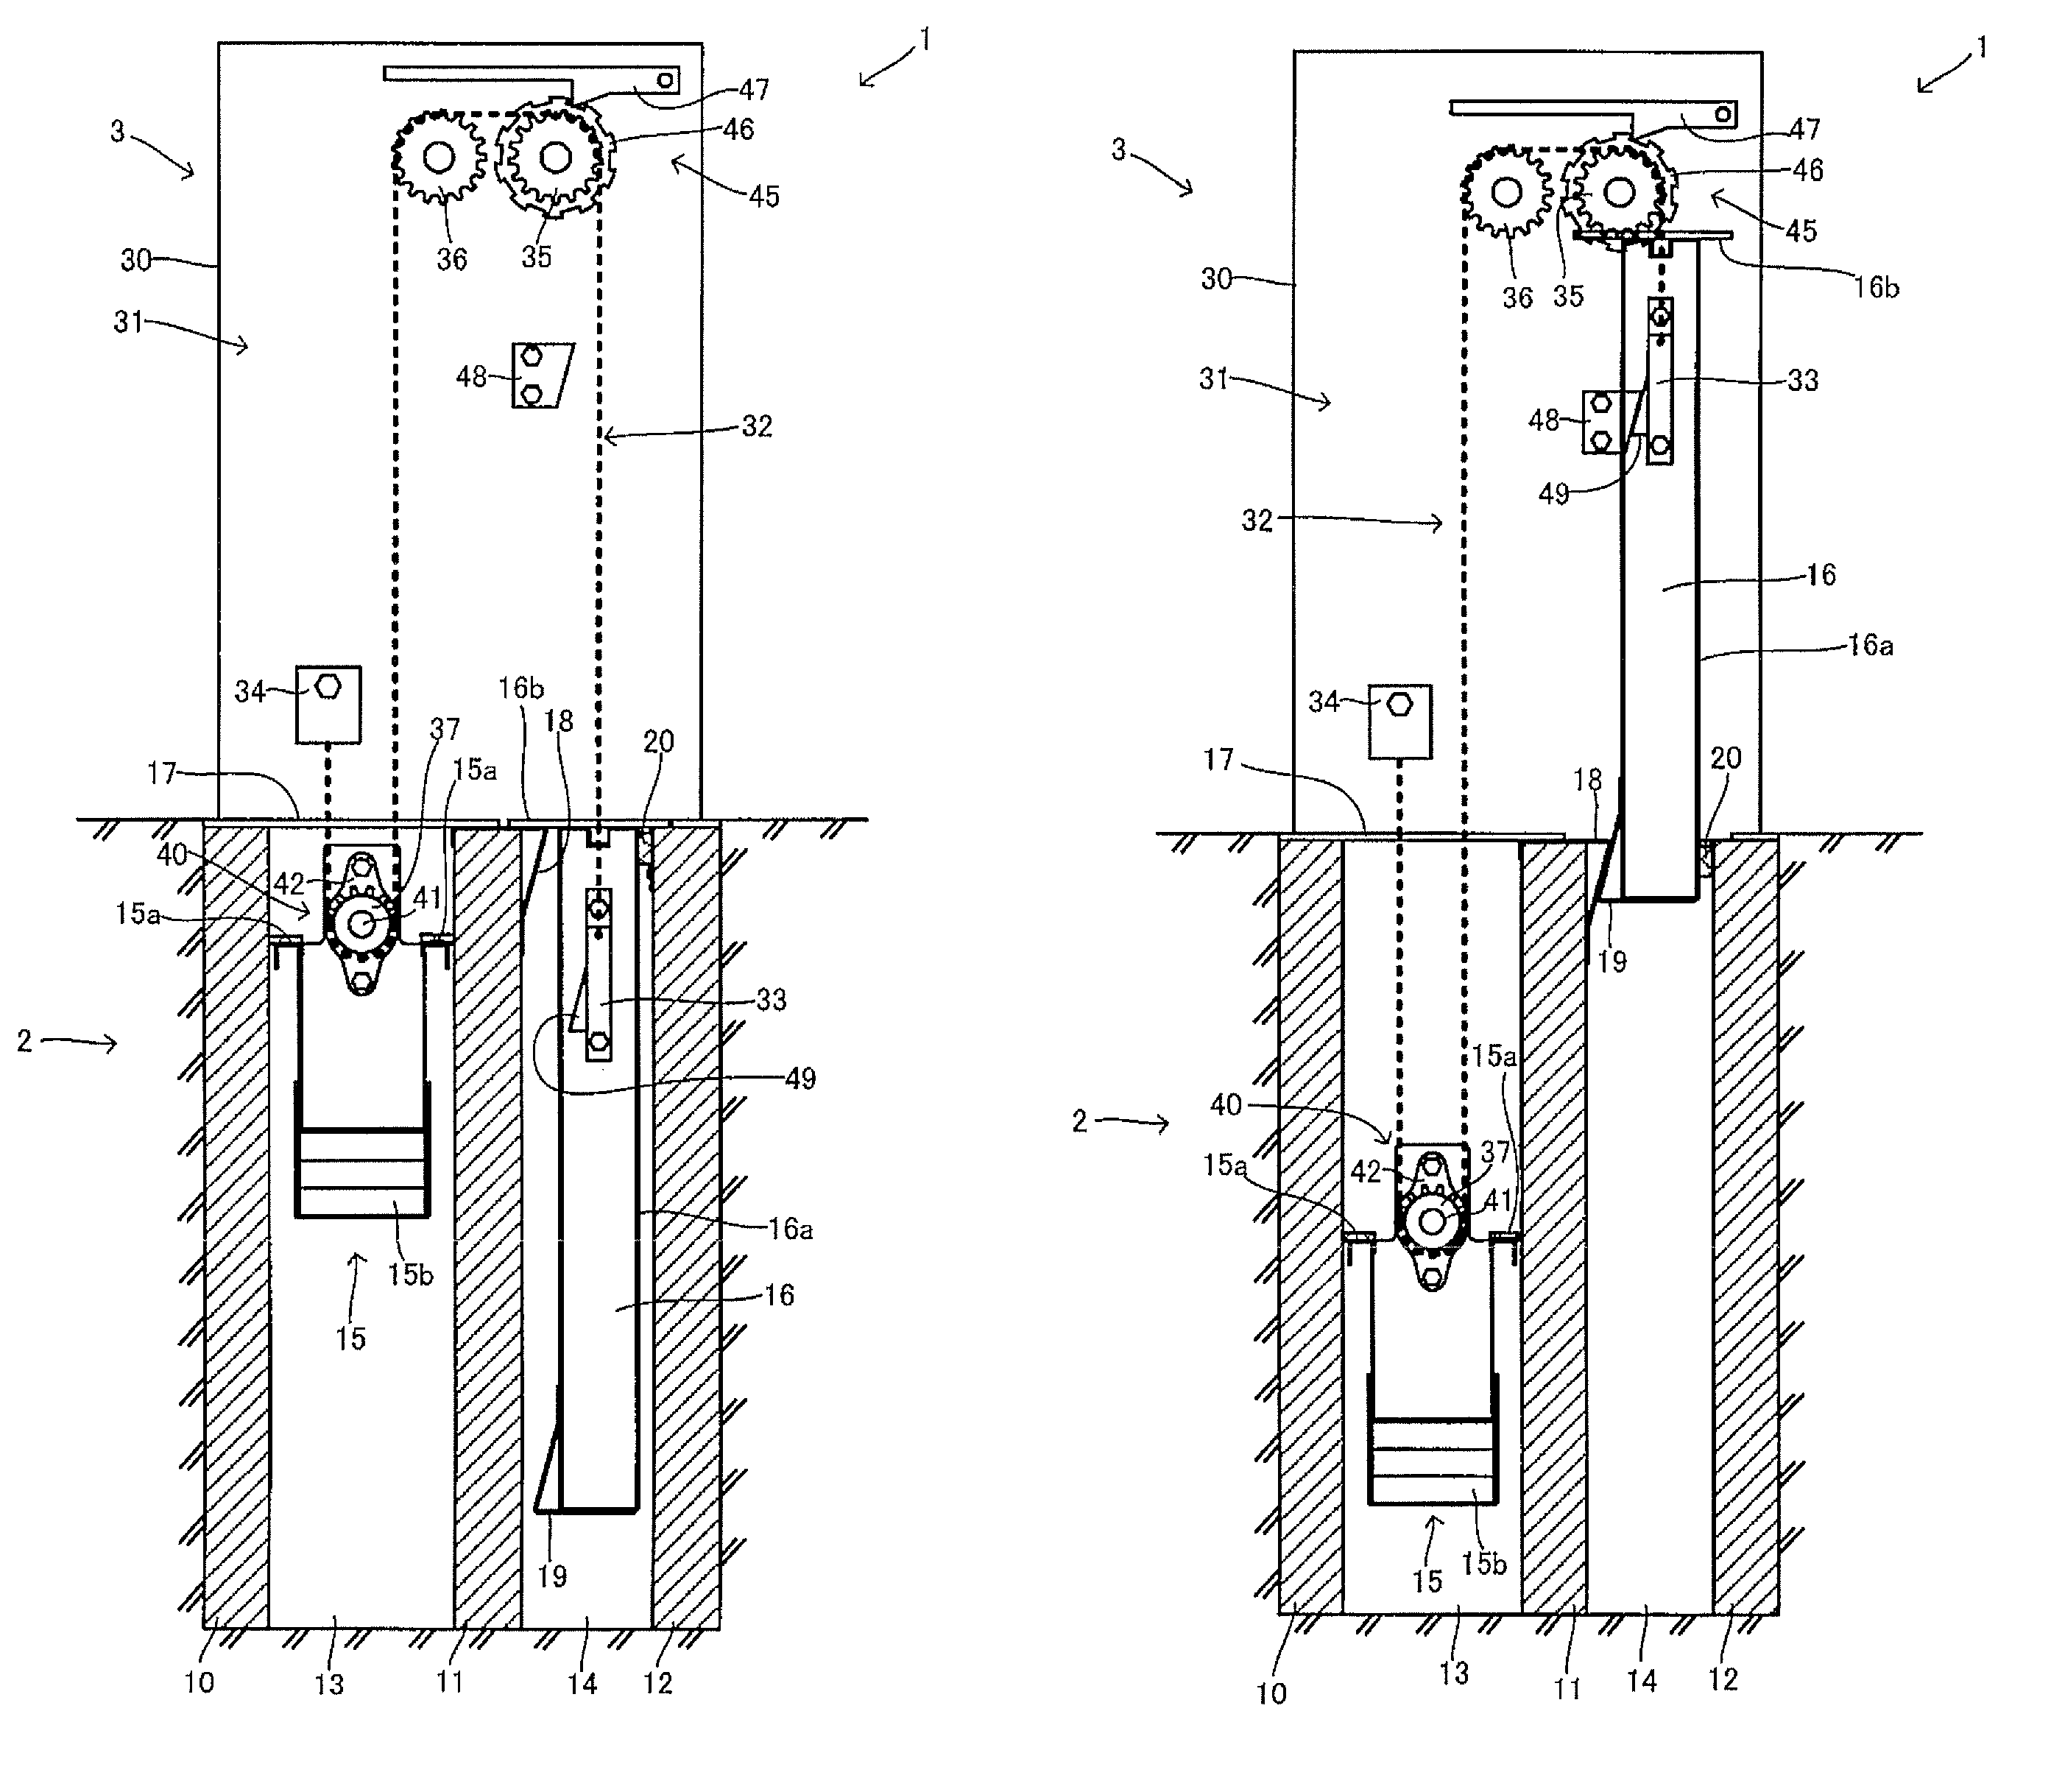 Water blocking board apparatus